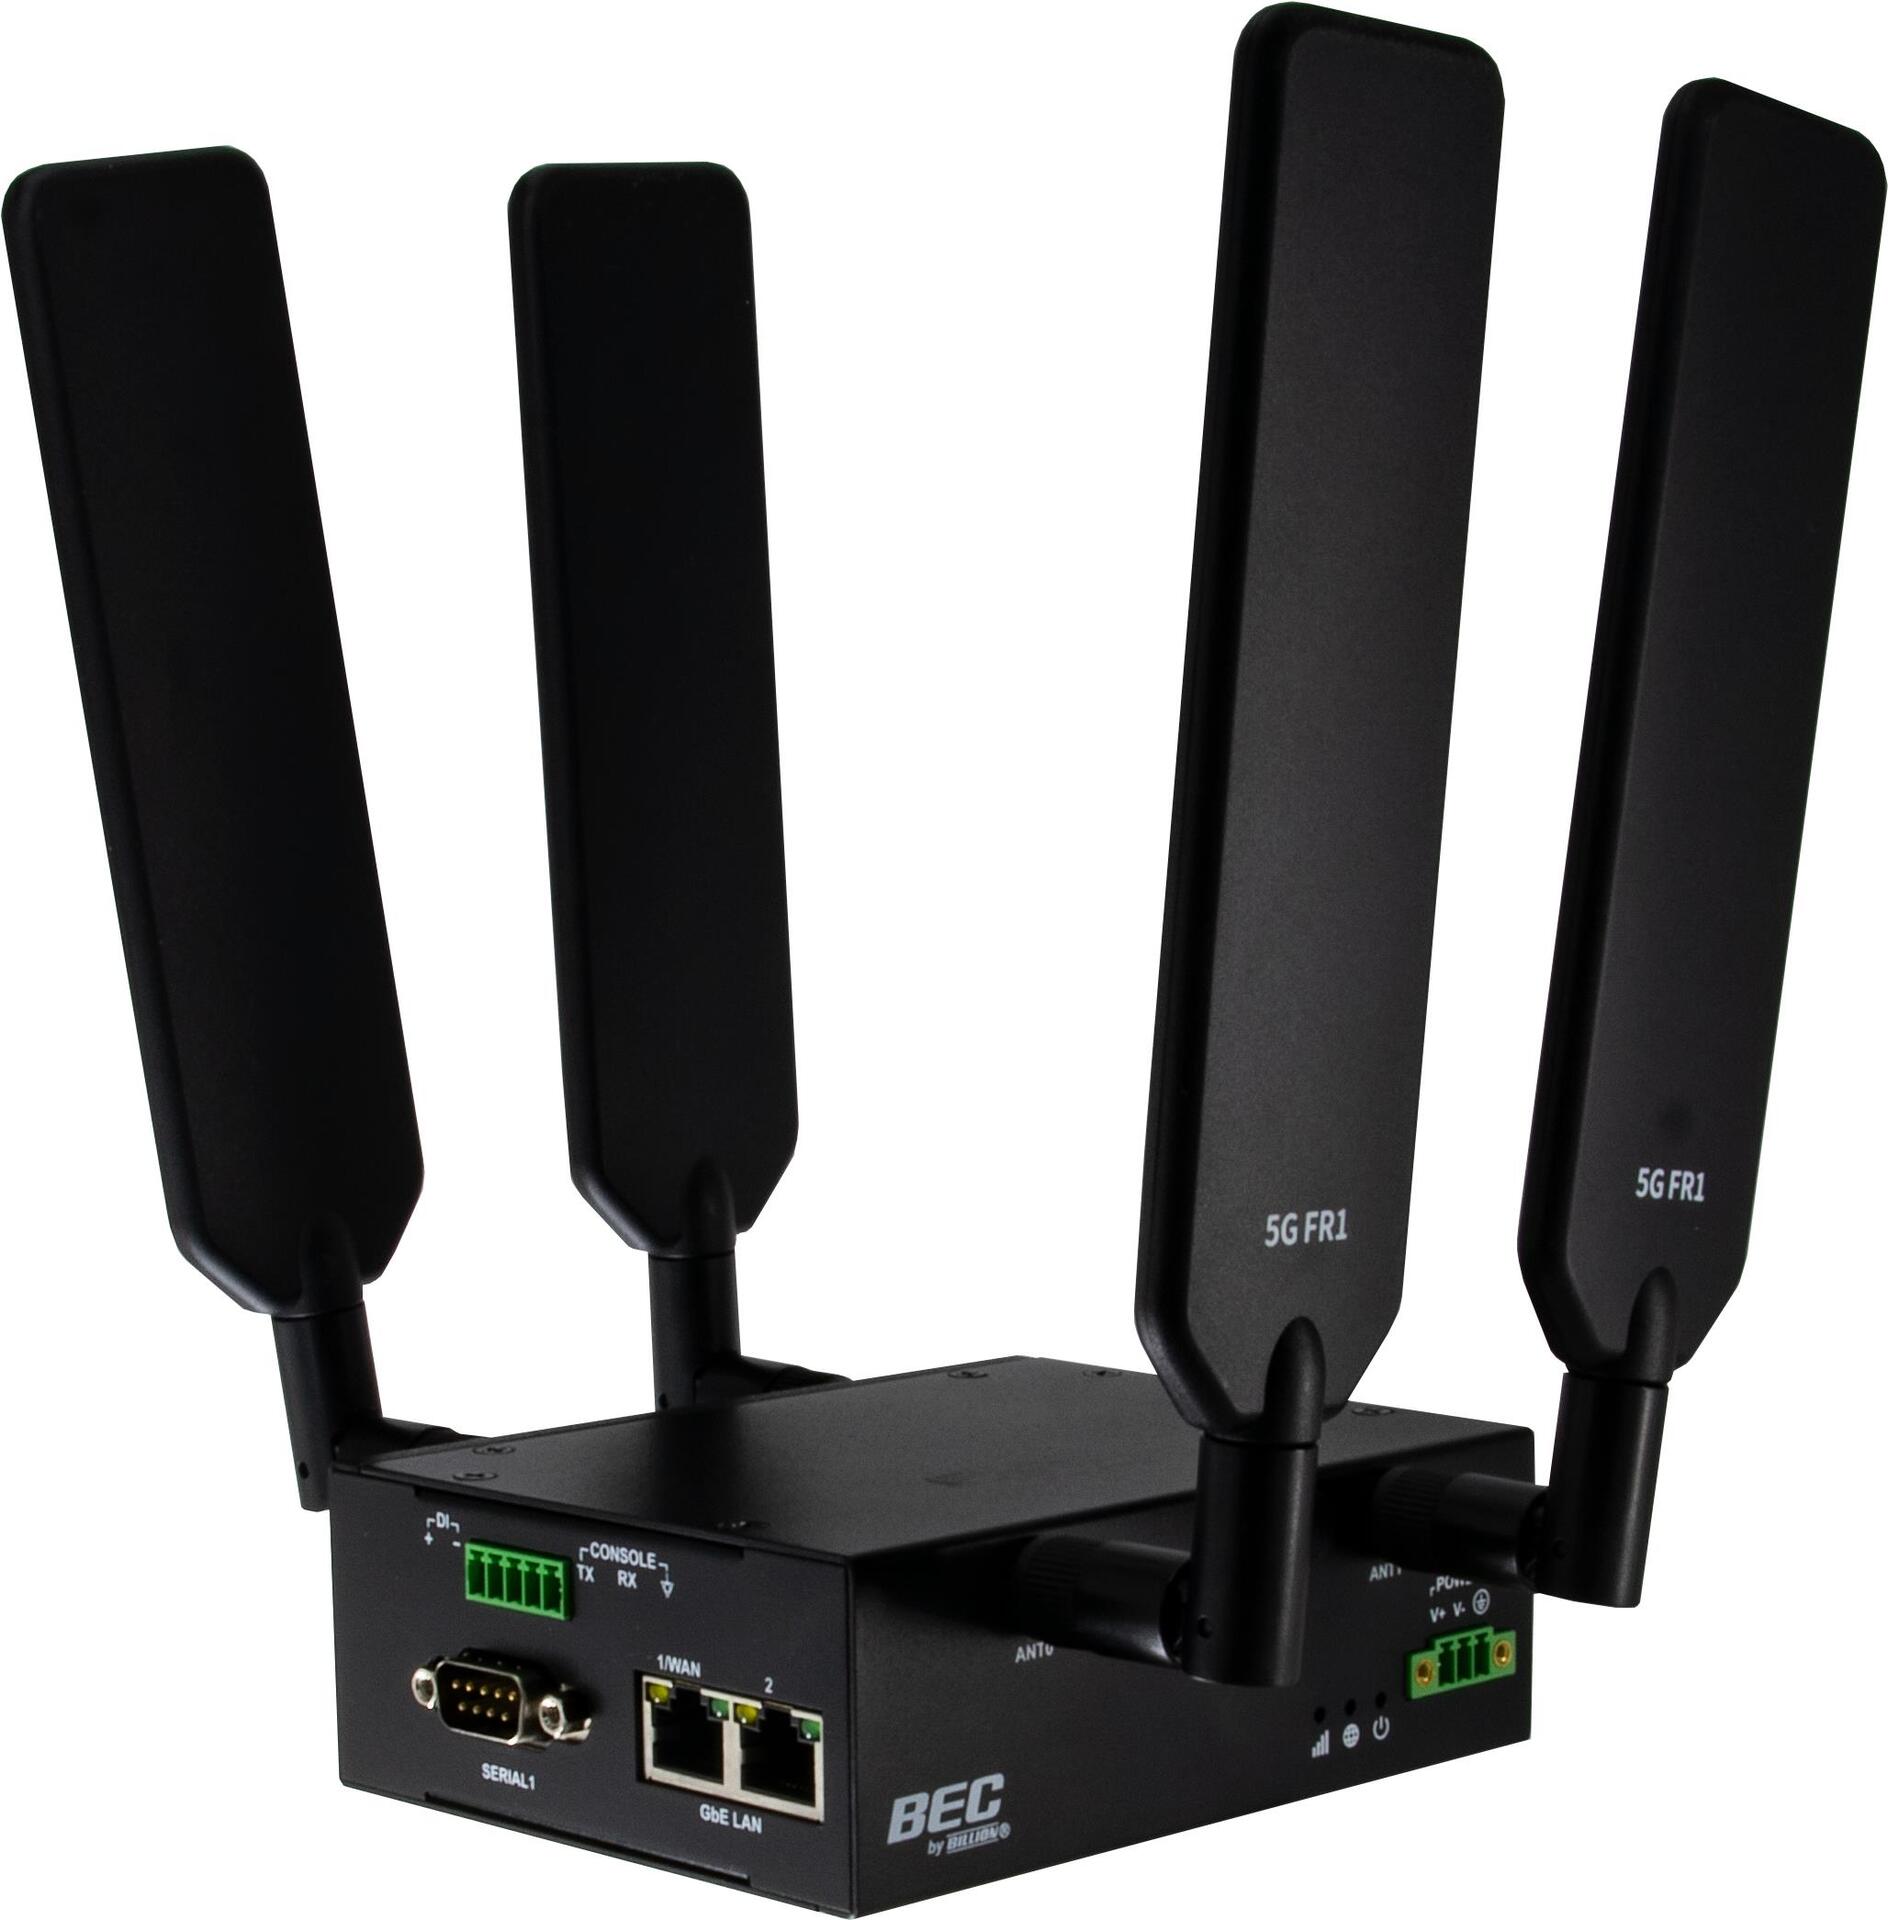 BECbyBillion 5G NR Industrial Router with Kabelrouter Gigabit Ethernet Schwarz (MX-220 5G)